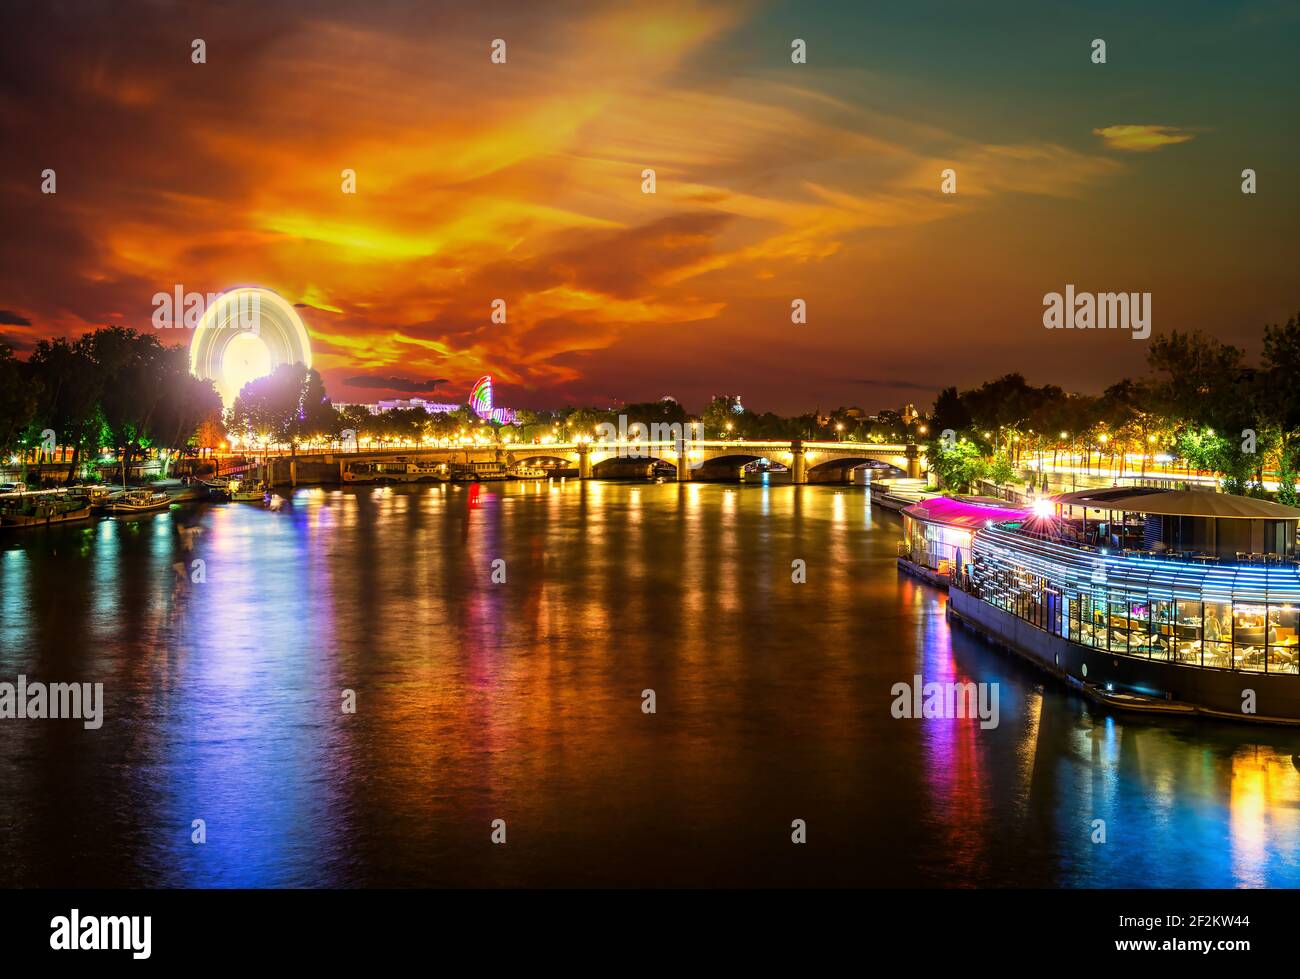 Illuminated ferris wheel and river Seine in Paris at sunset, France Stock Photo